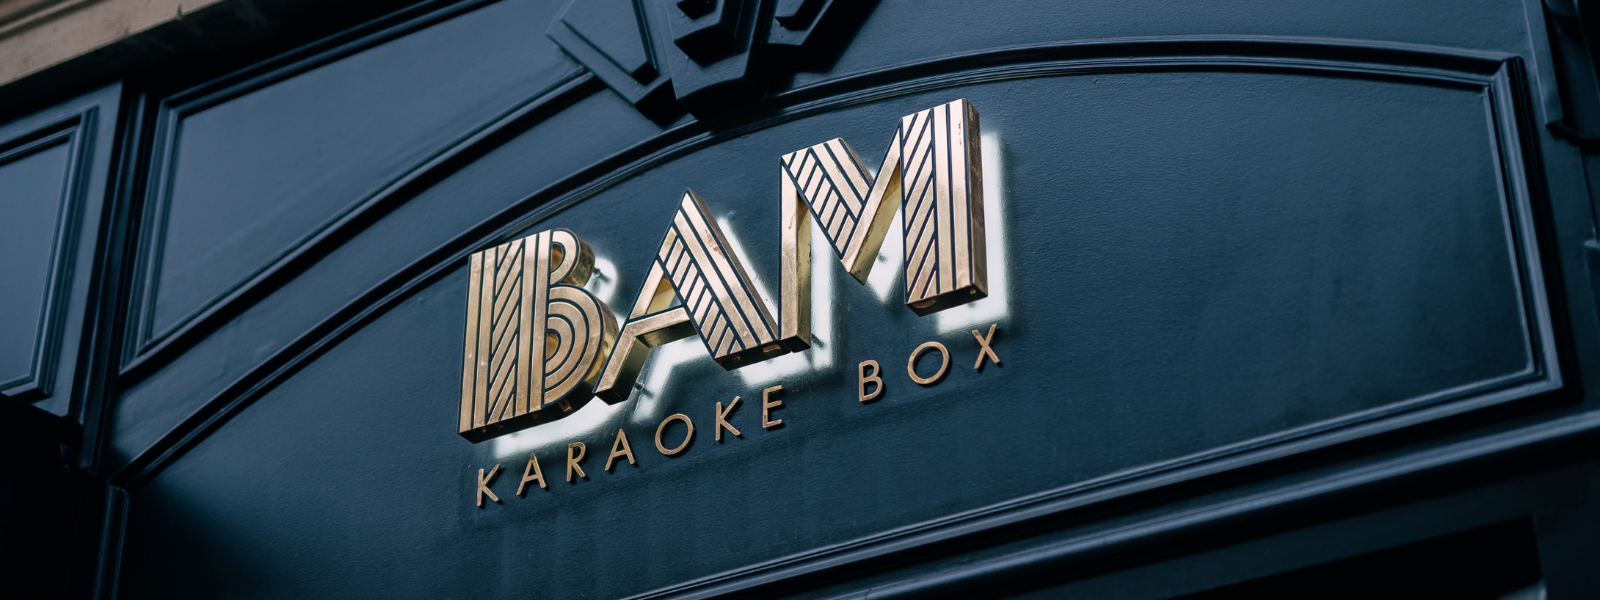 bam-karaoke-box